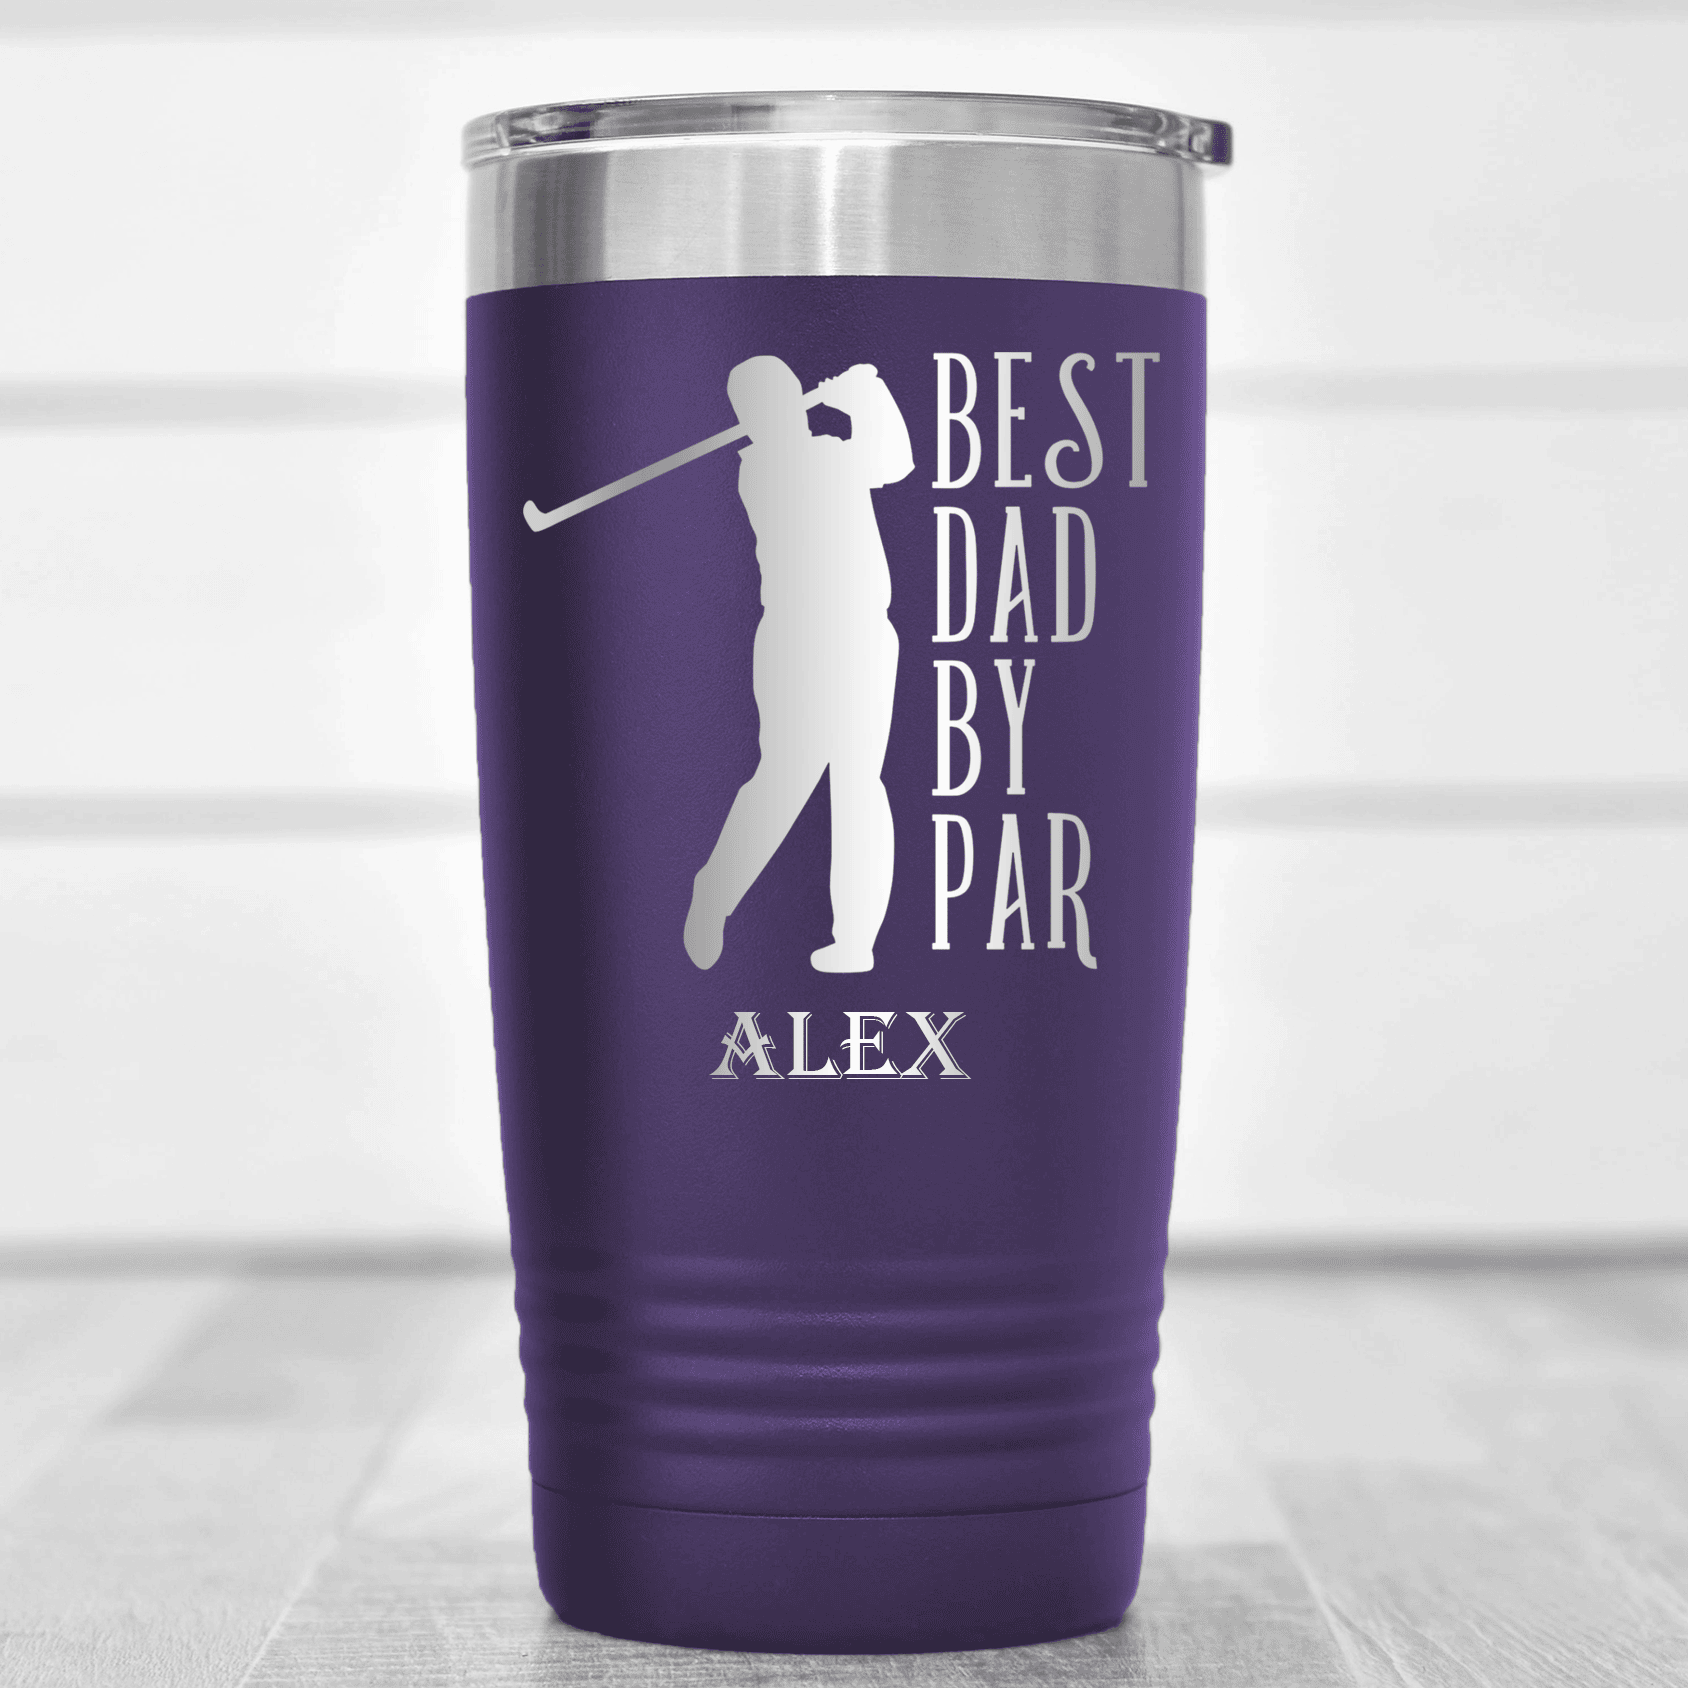 Purple Golf Tumbler With Best Dad By Par Design